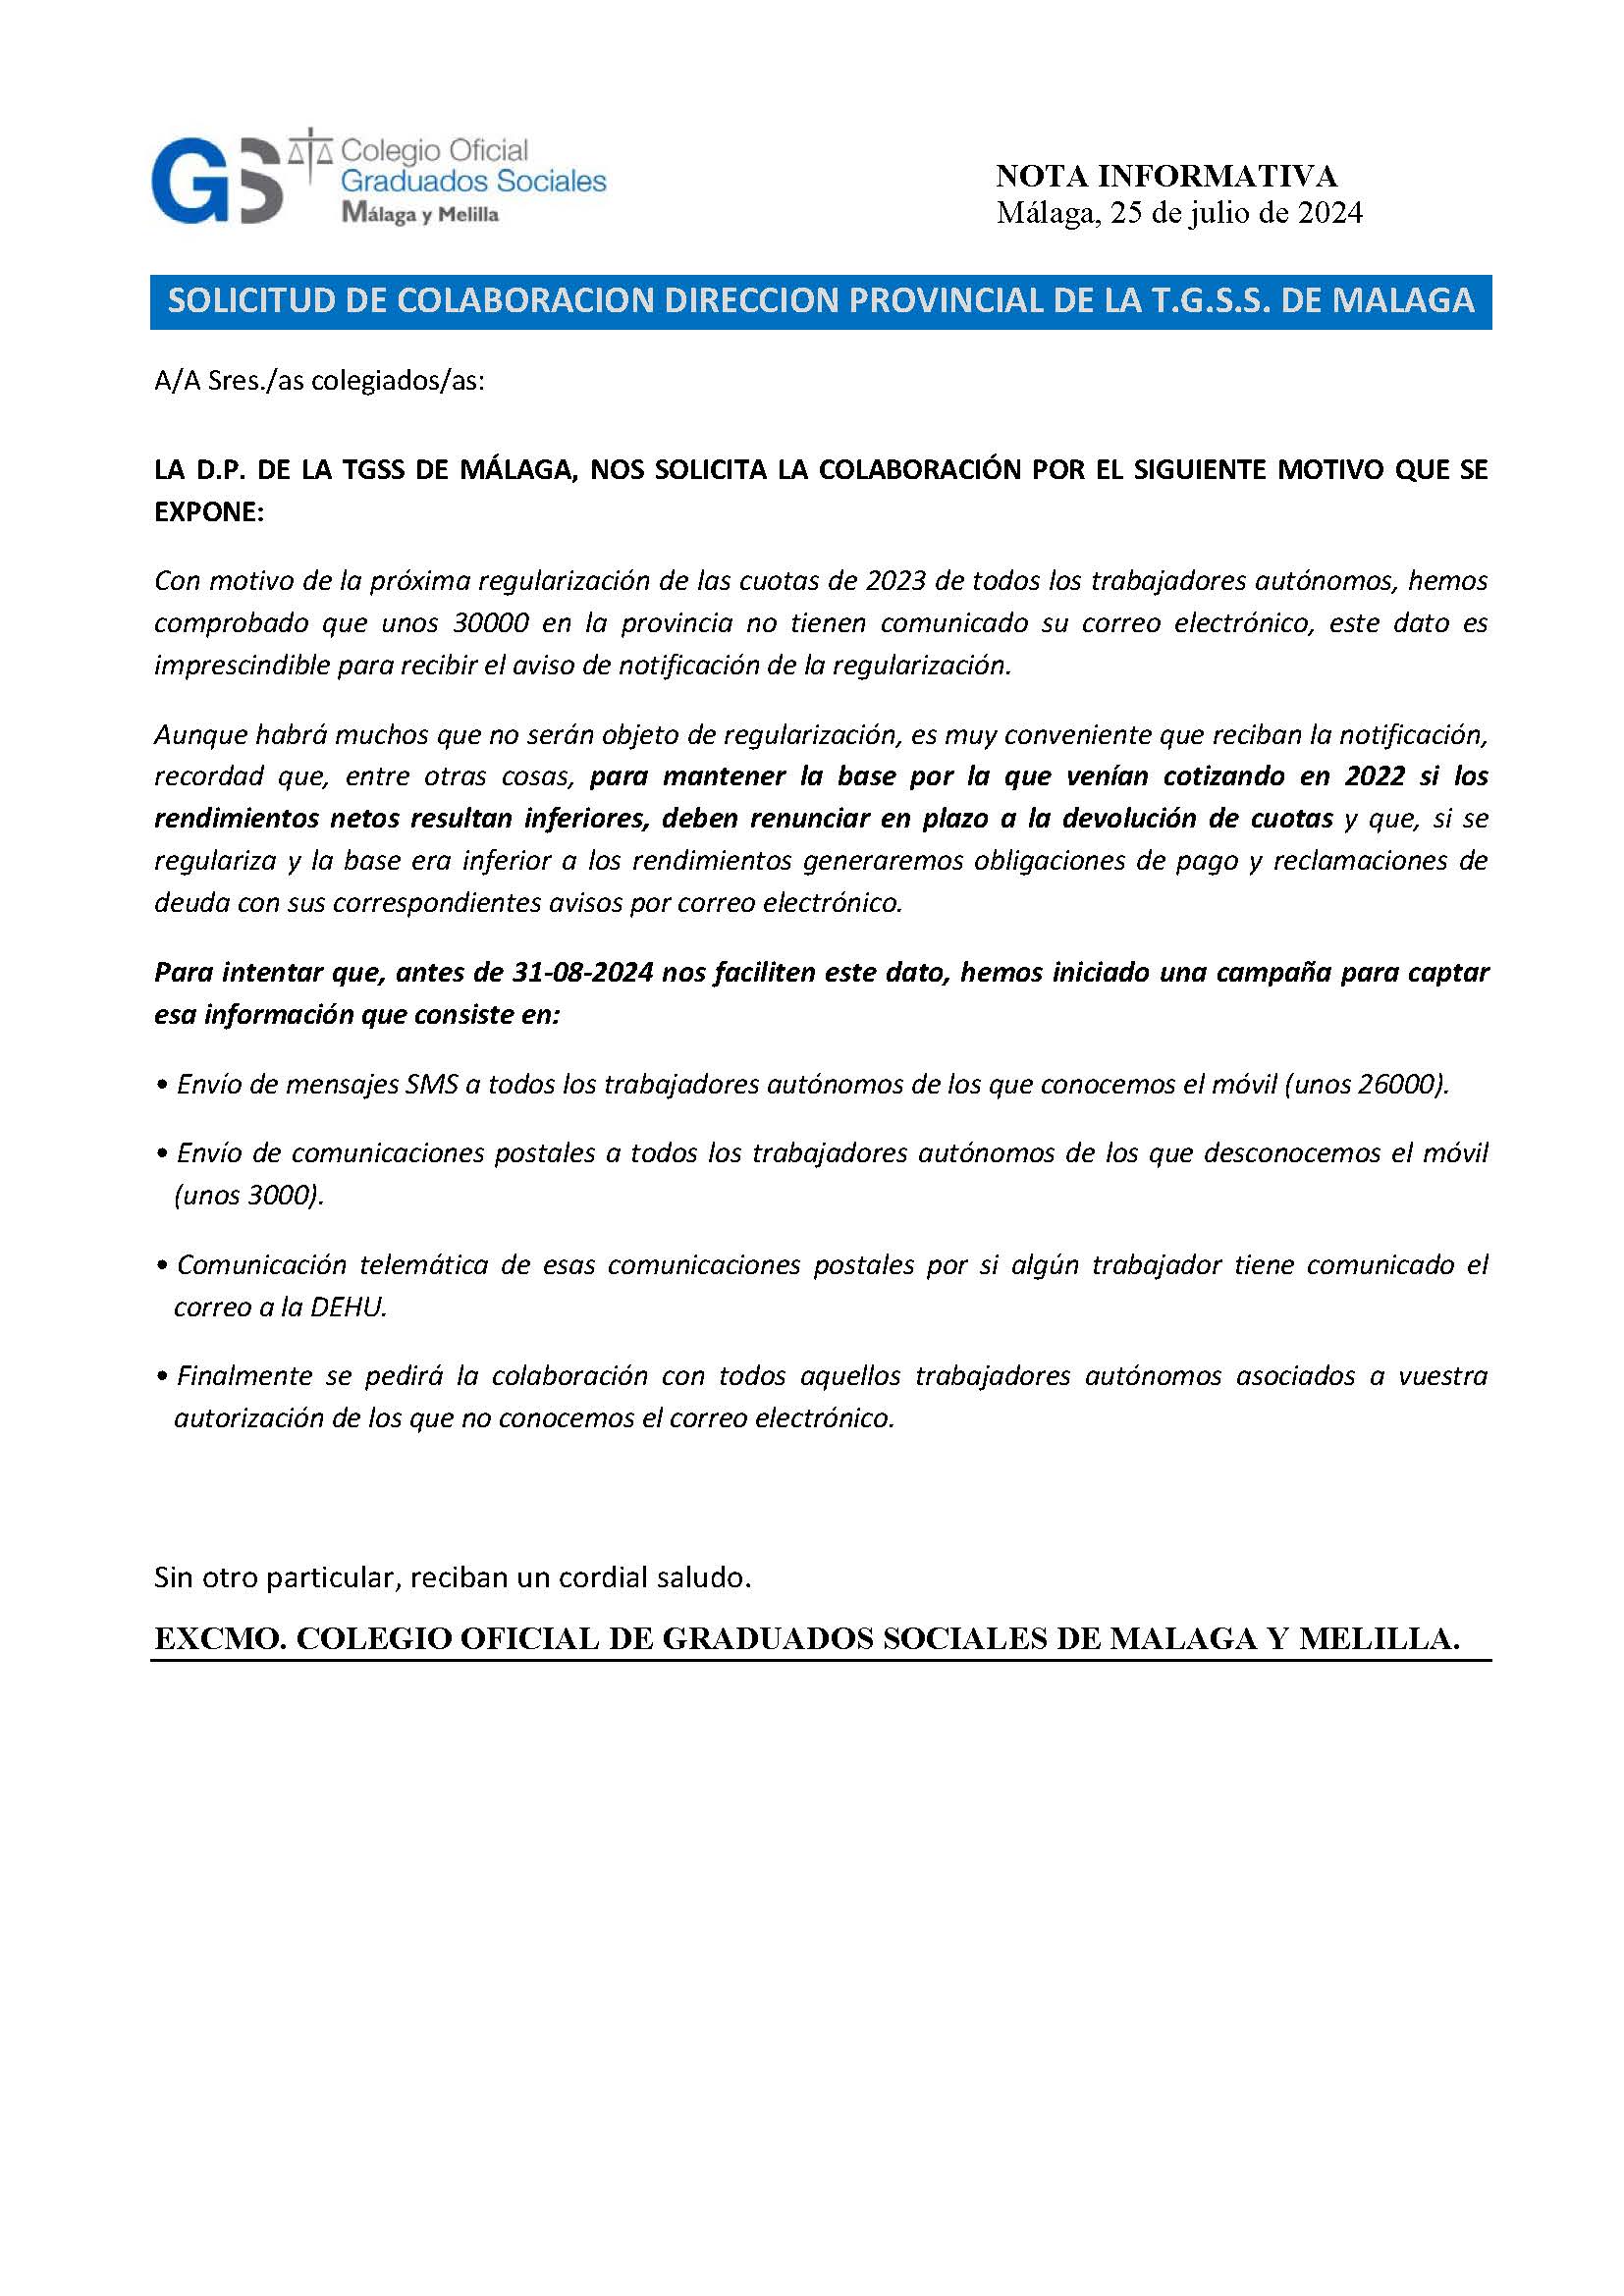 25.07.24 NOTA INFORMATIVA SOLICITUD DE COLABORACION DIRECCION PROVINCIAL DE LA TGSS DE MALAGA